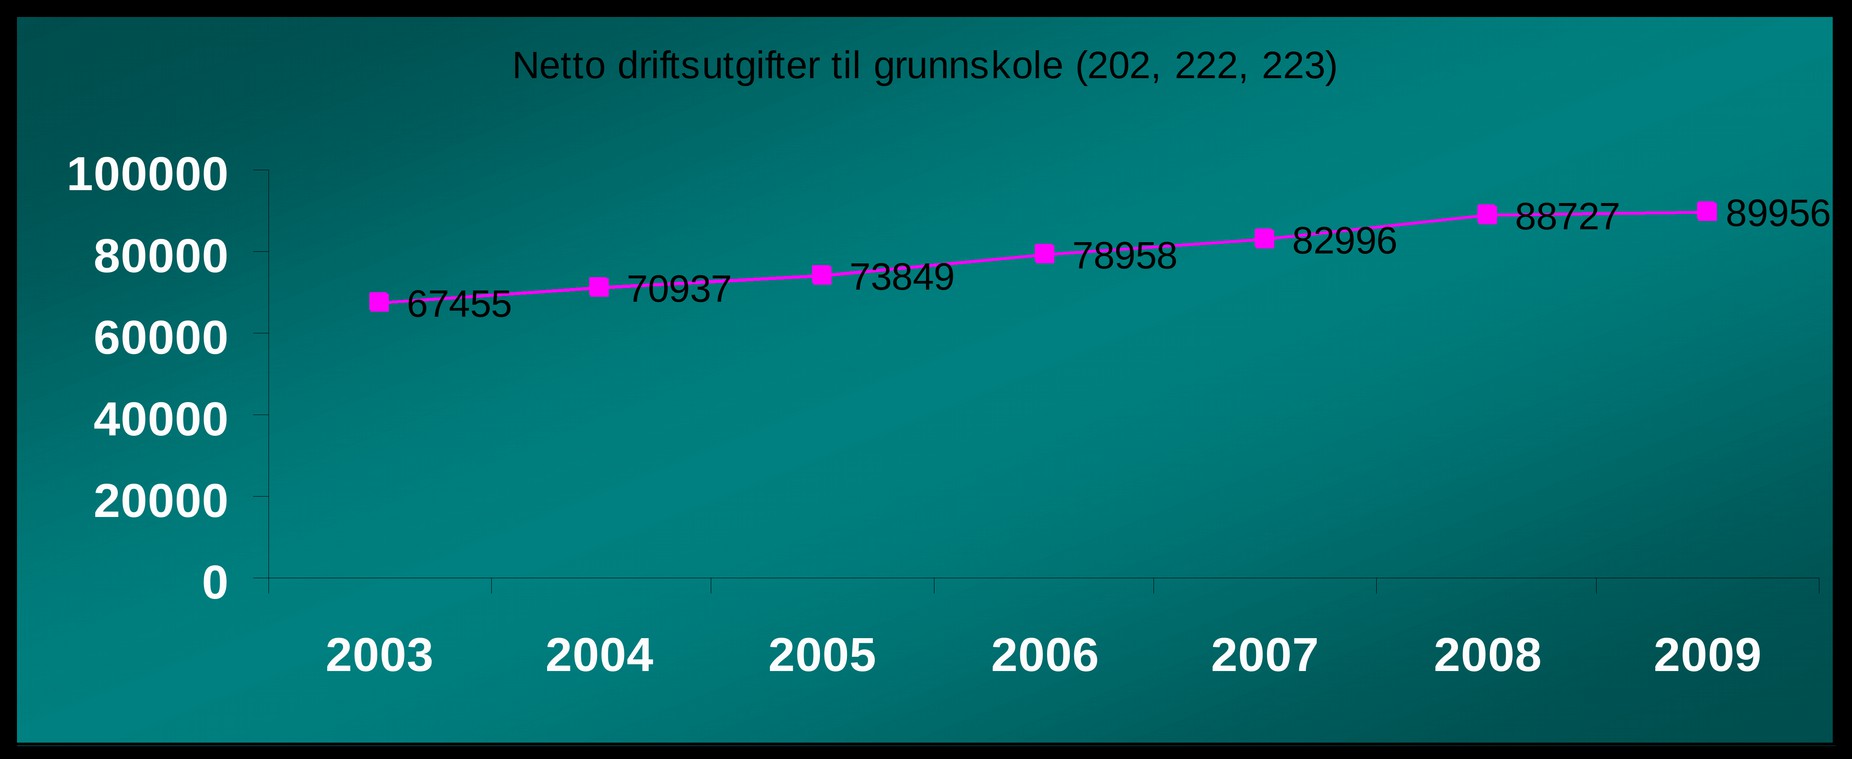 Sak 26/10 Drift av grunnskole i Alstahaug utgjorde i 2009 nær 90 mill. i netto utgift. En elevplass i Alstahaug kommune kostet i 2009 ca 94 000.